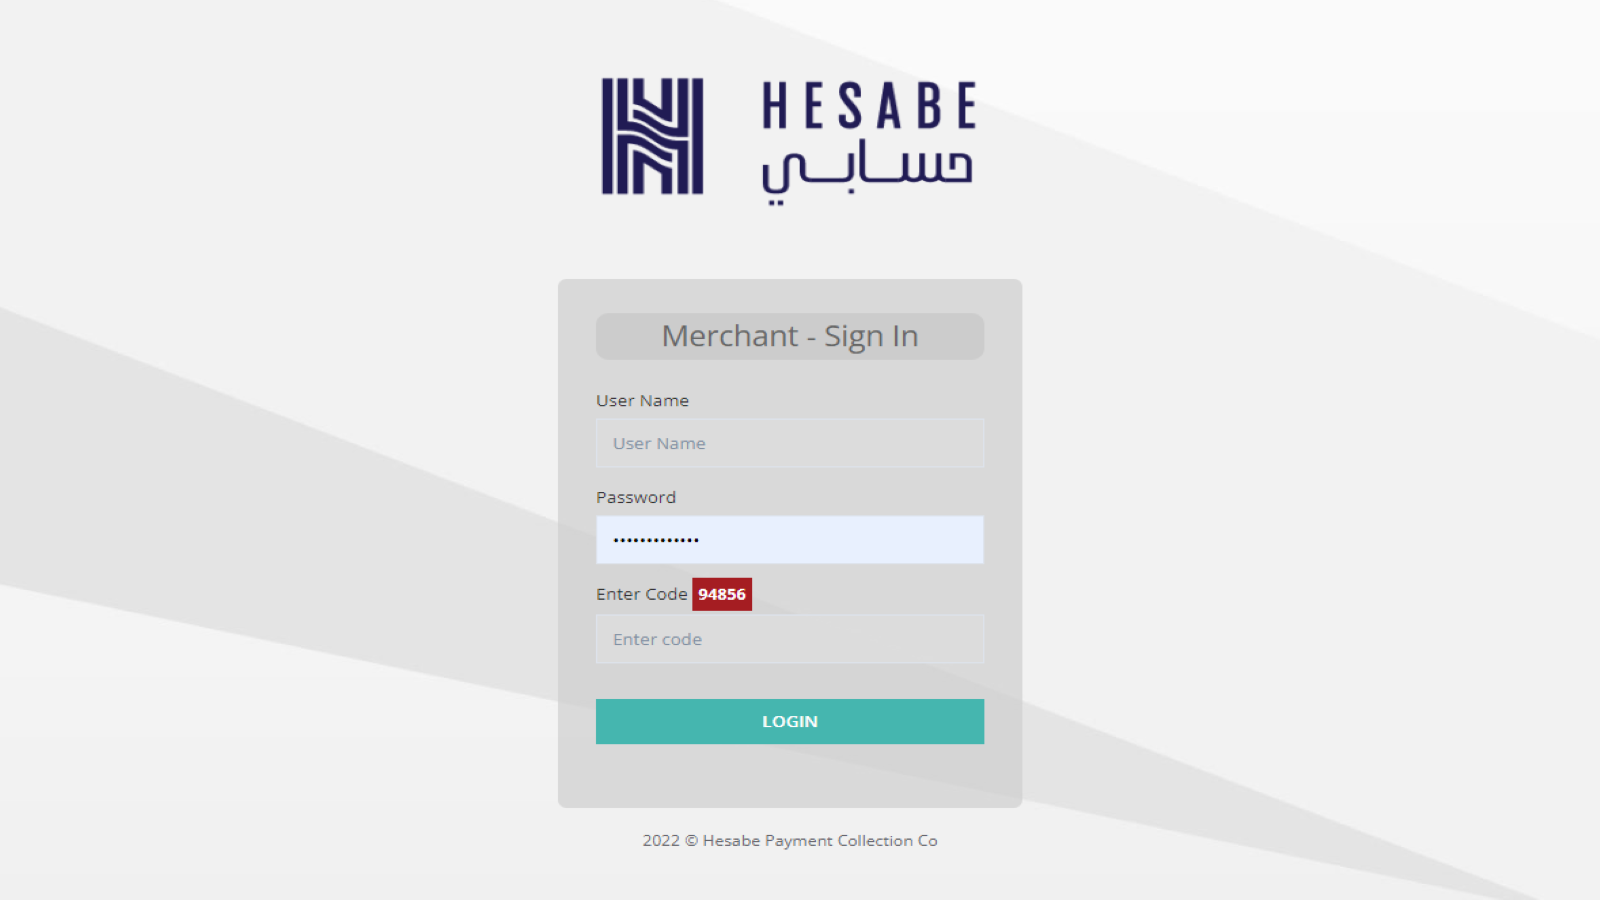 Login-Authenticate using Hesabe Merchant credentials